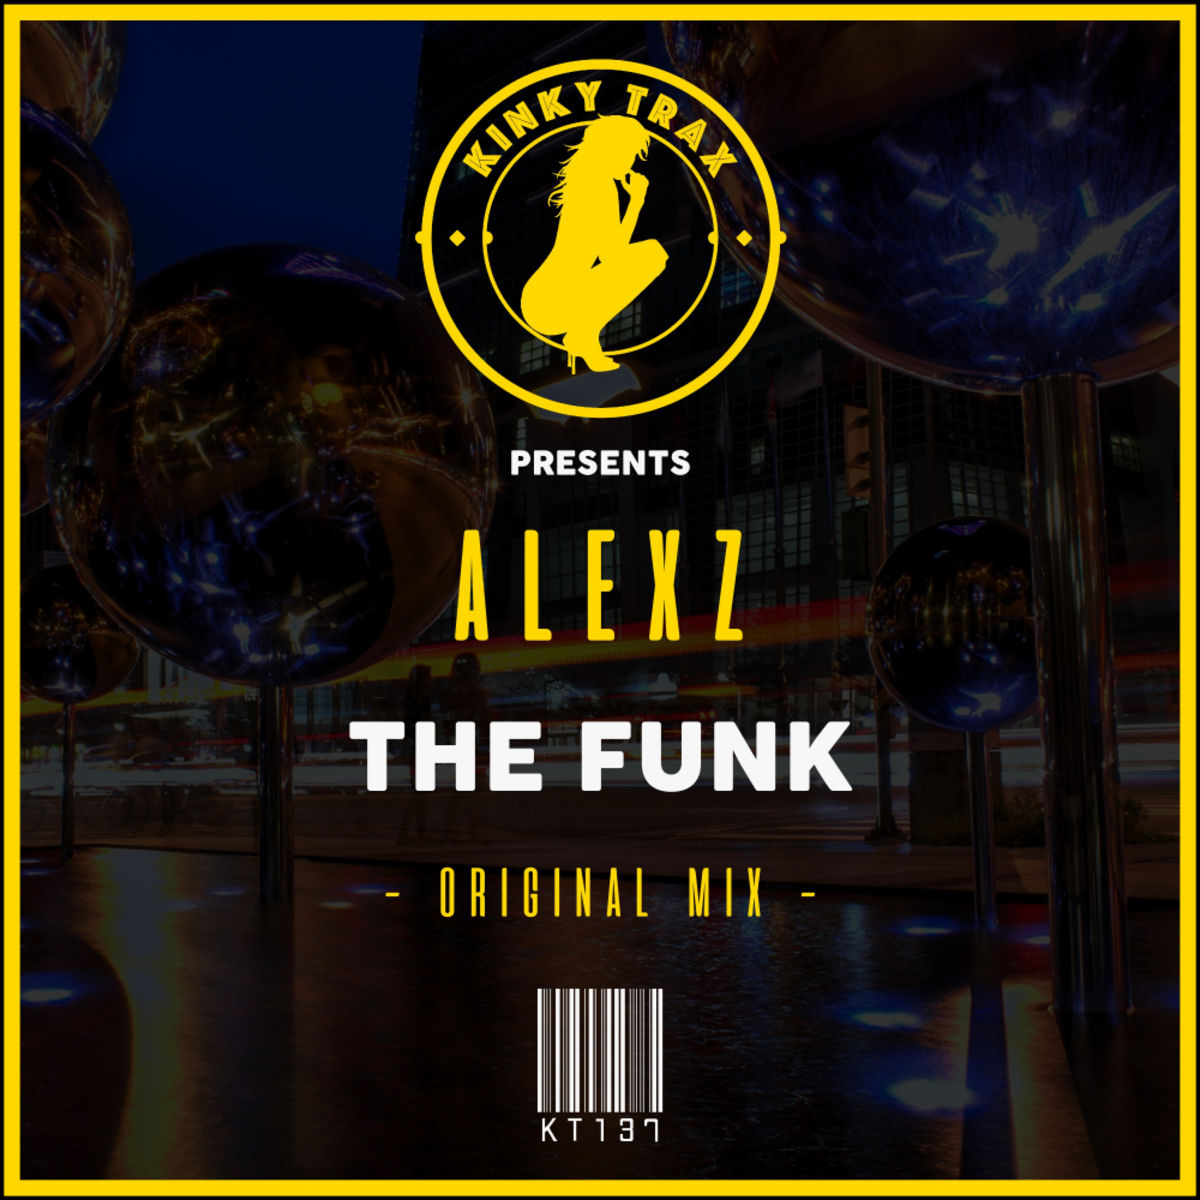 AlexZ - The Funk / Kinky Trax